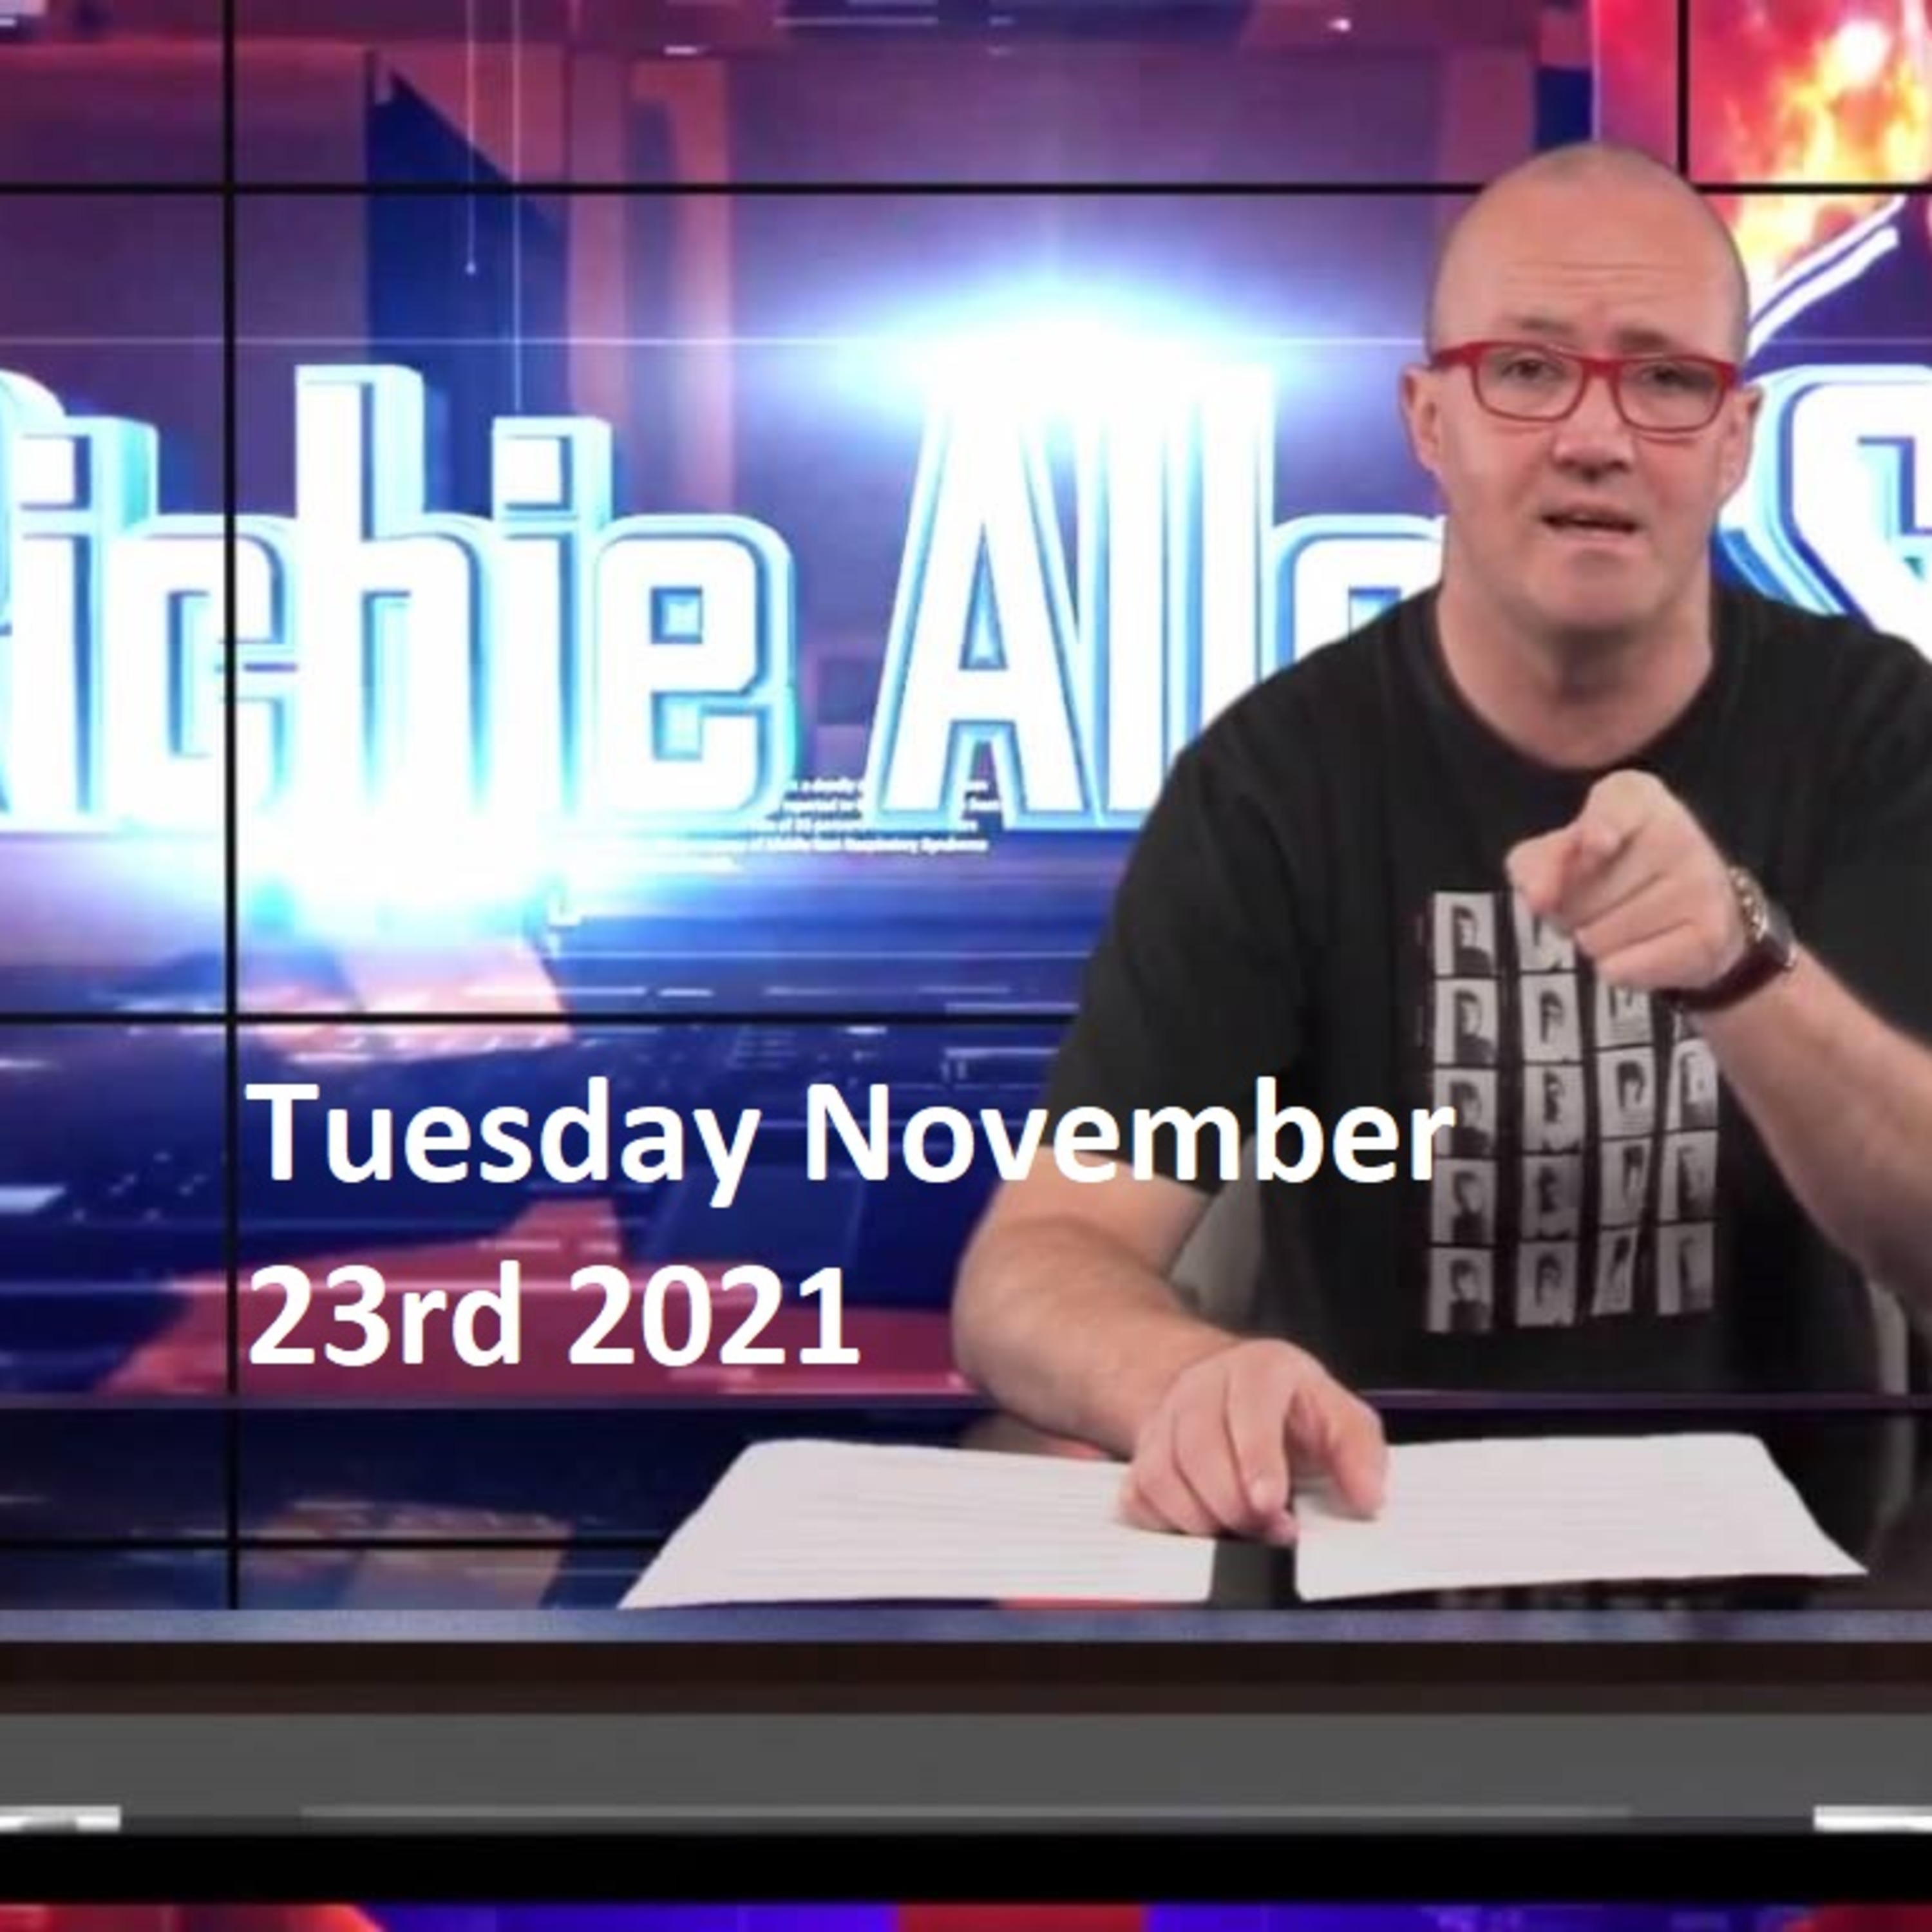 Episode 1369: The Richie Allen Show Tuesday November 23rd 2021